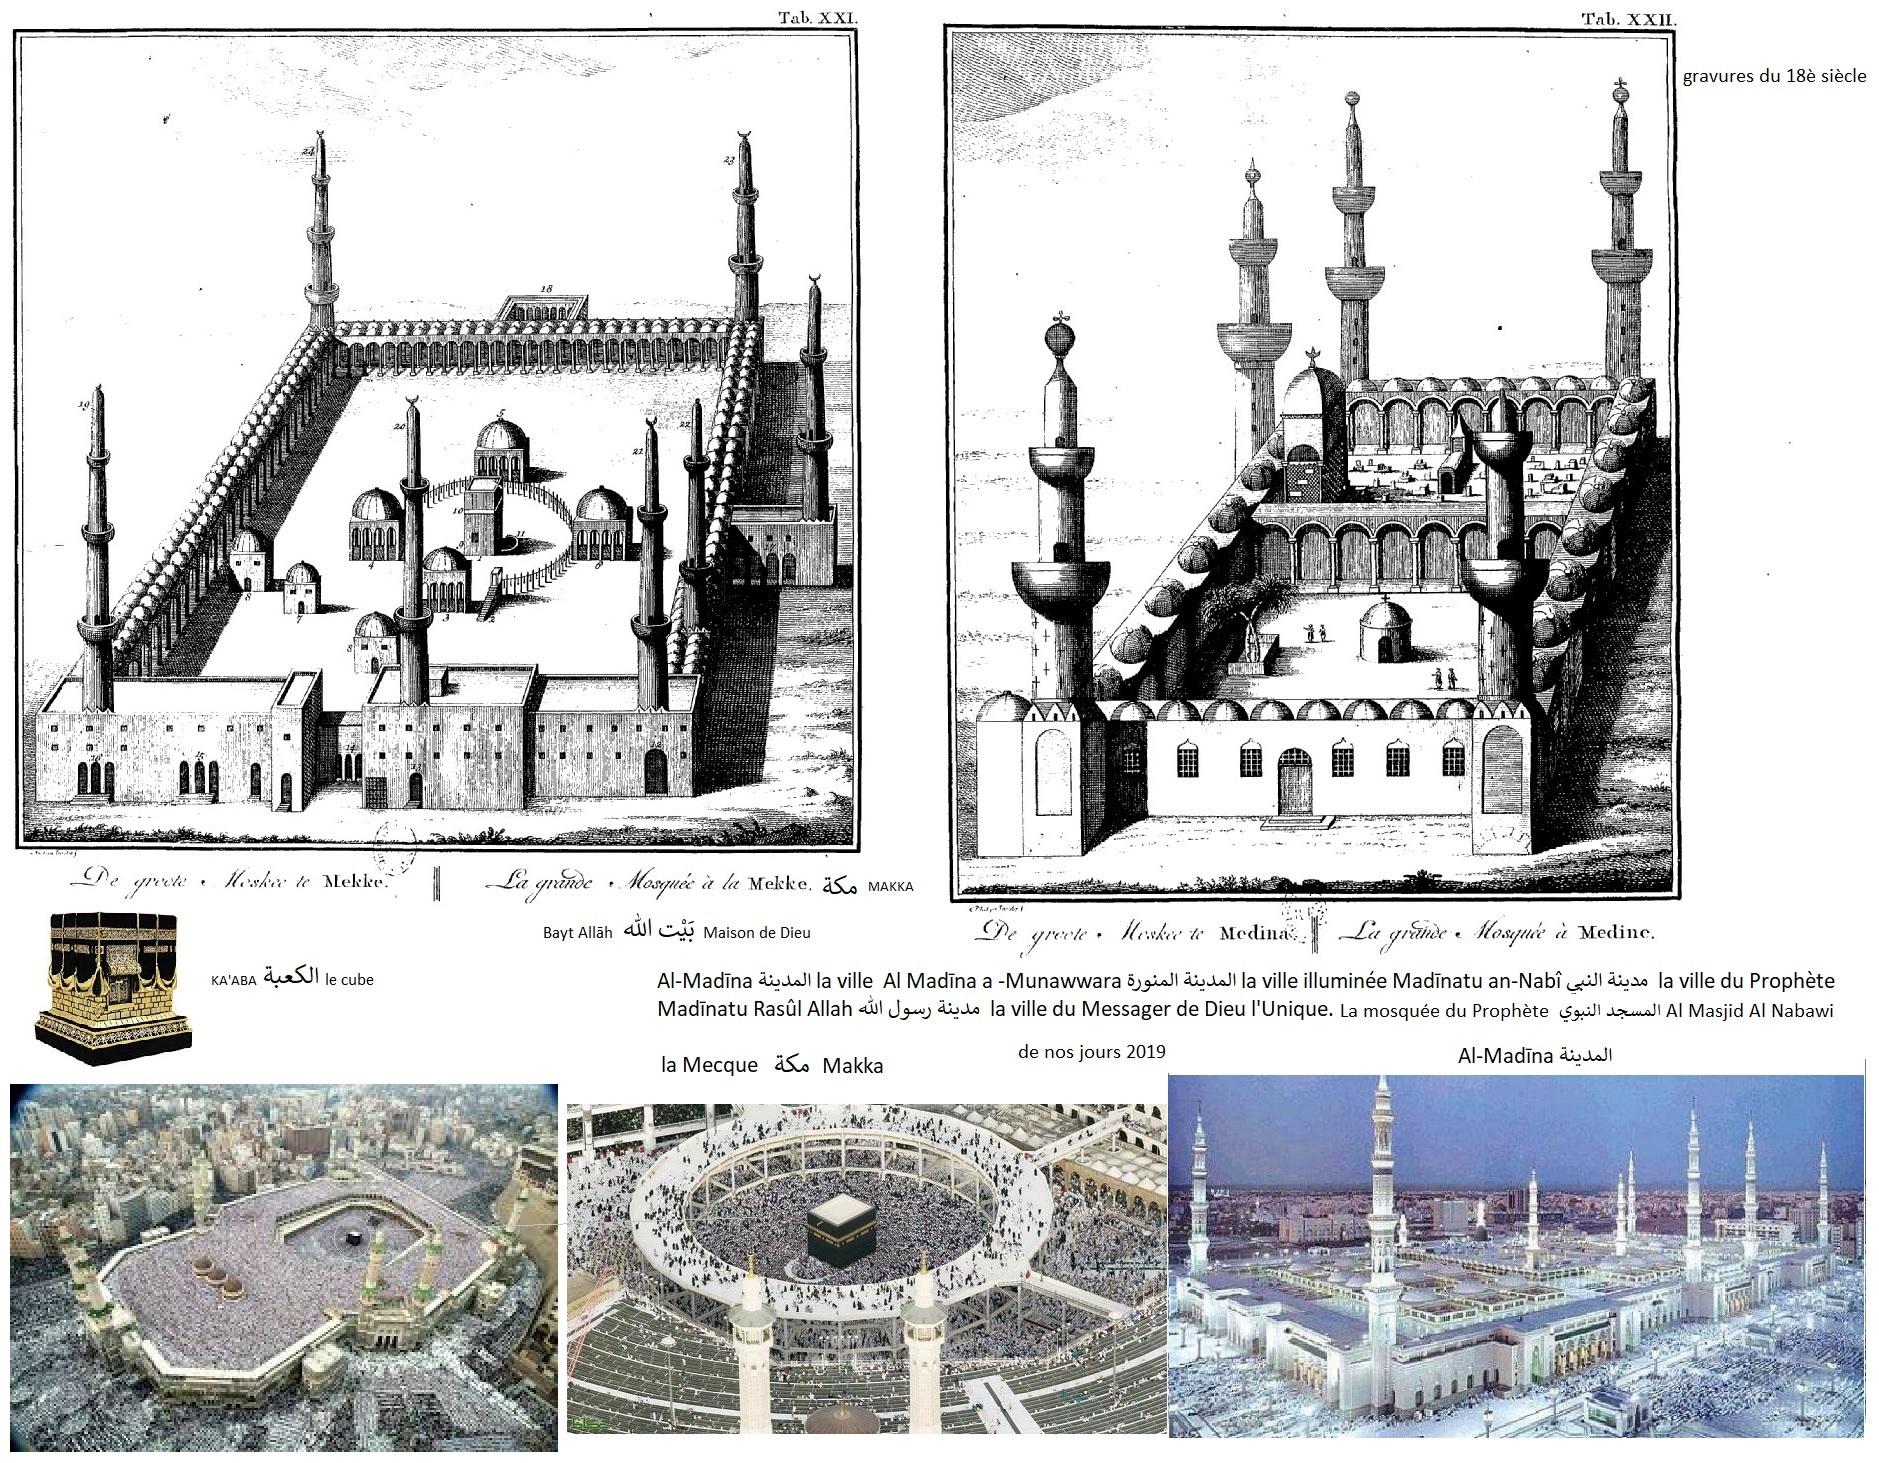 La mecque makka ka aba et medine al madina la mosquee du prophete al masjid al nabawi 2